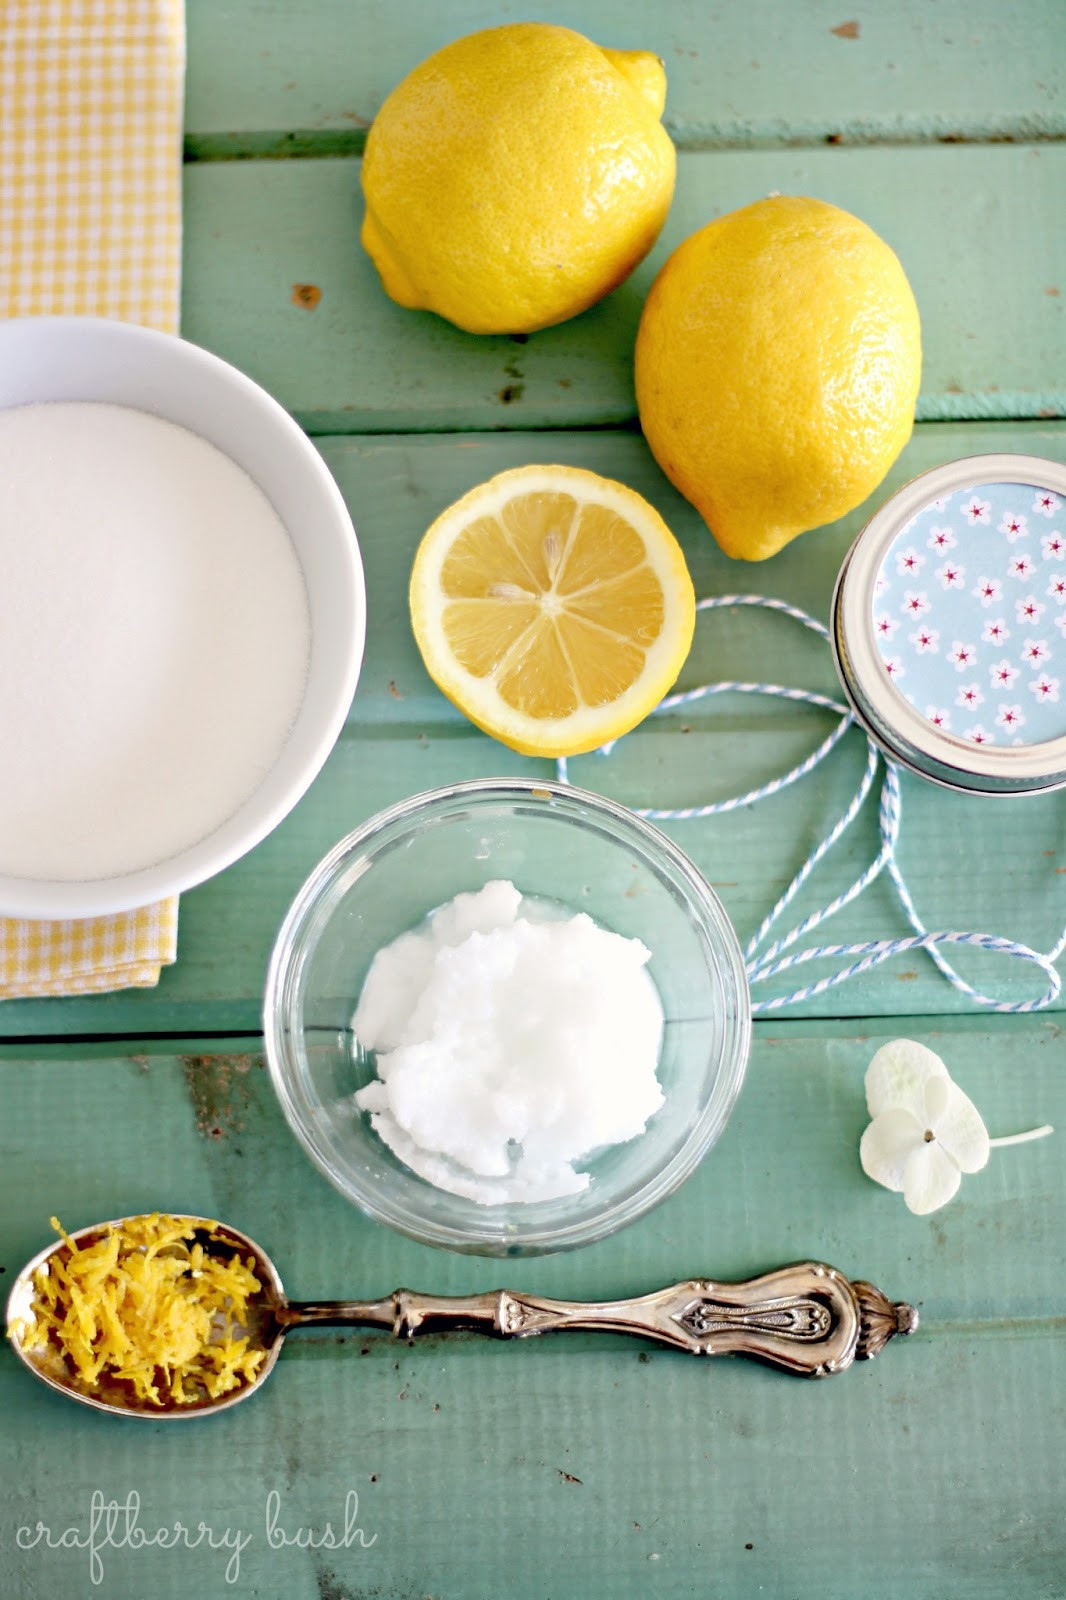 Best ideas about DIY Facial Scrub
. Save or Pin Super easy sugar lemon scrub recipe Now.